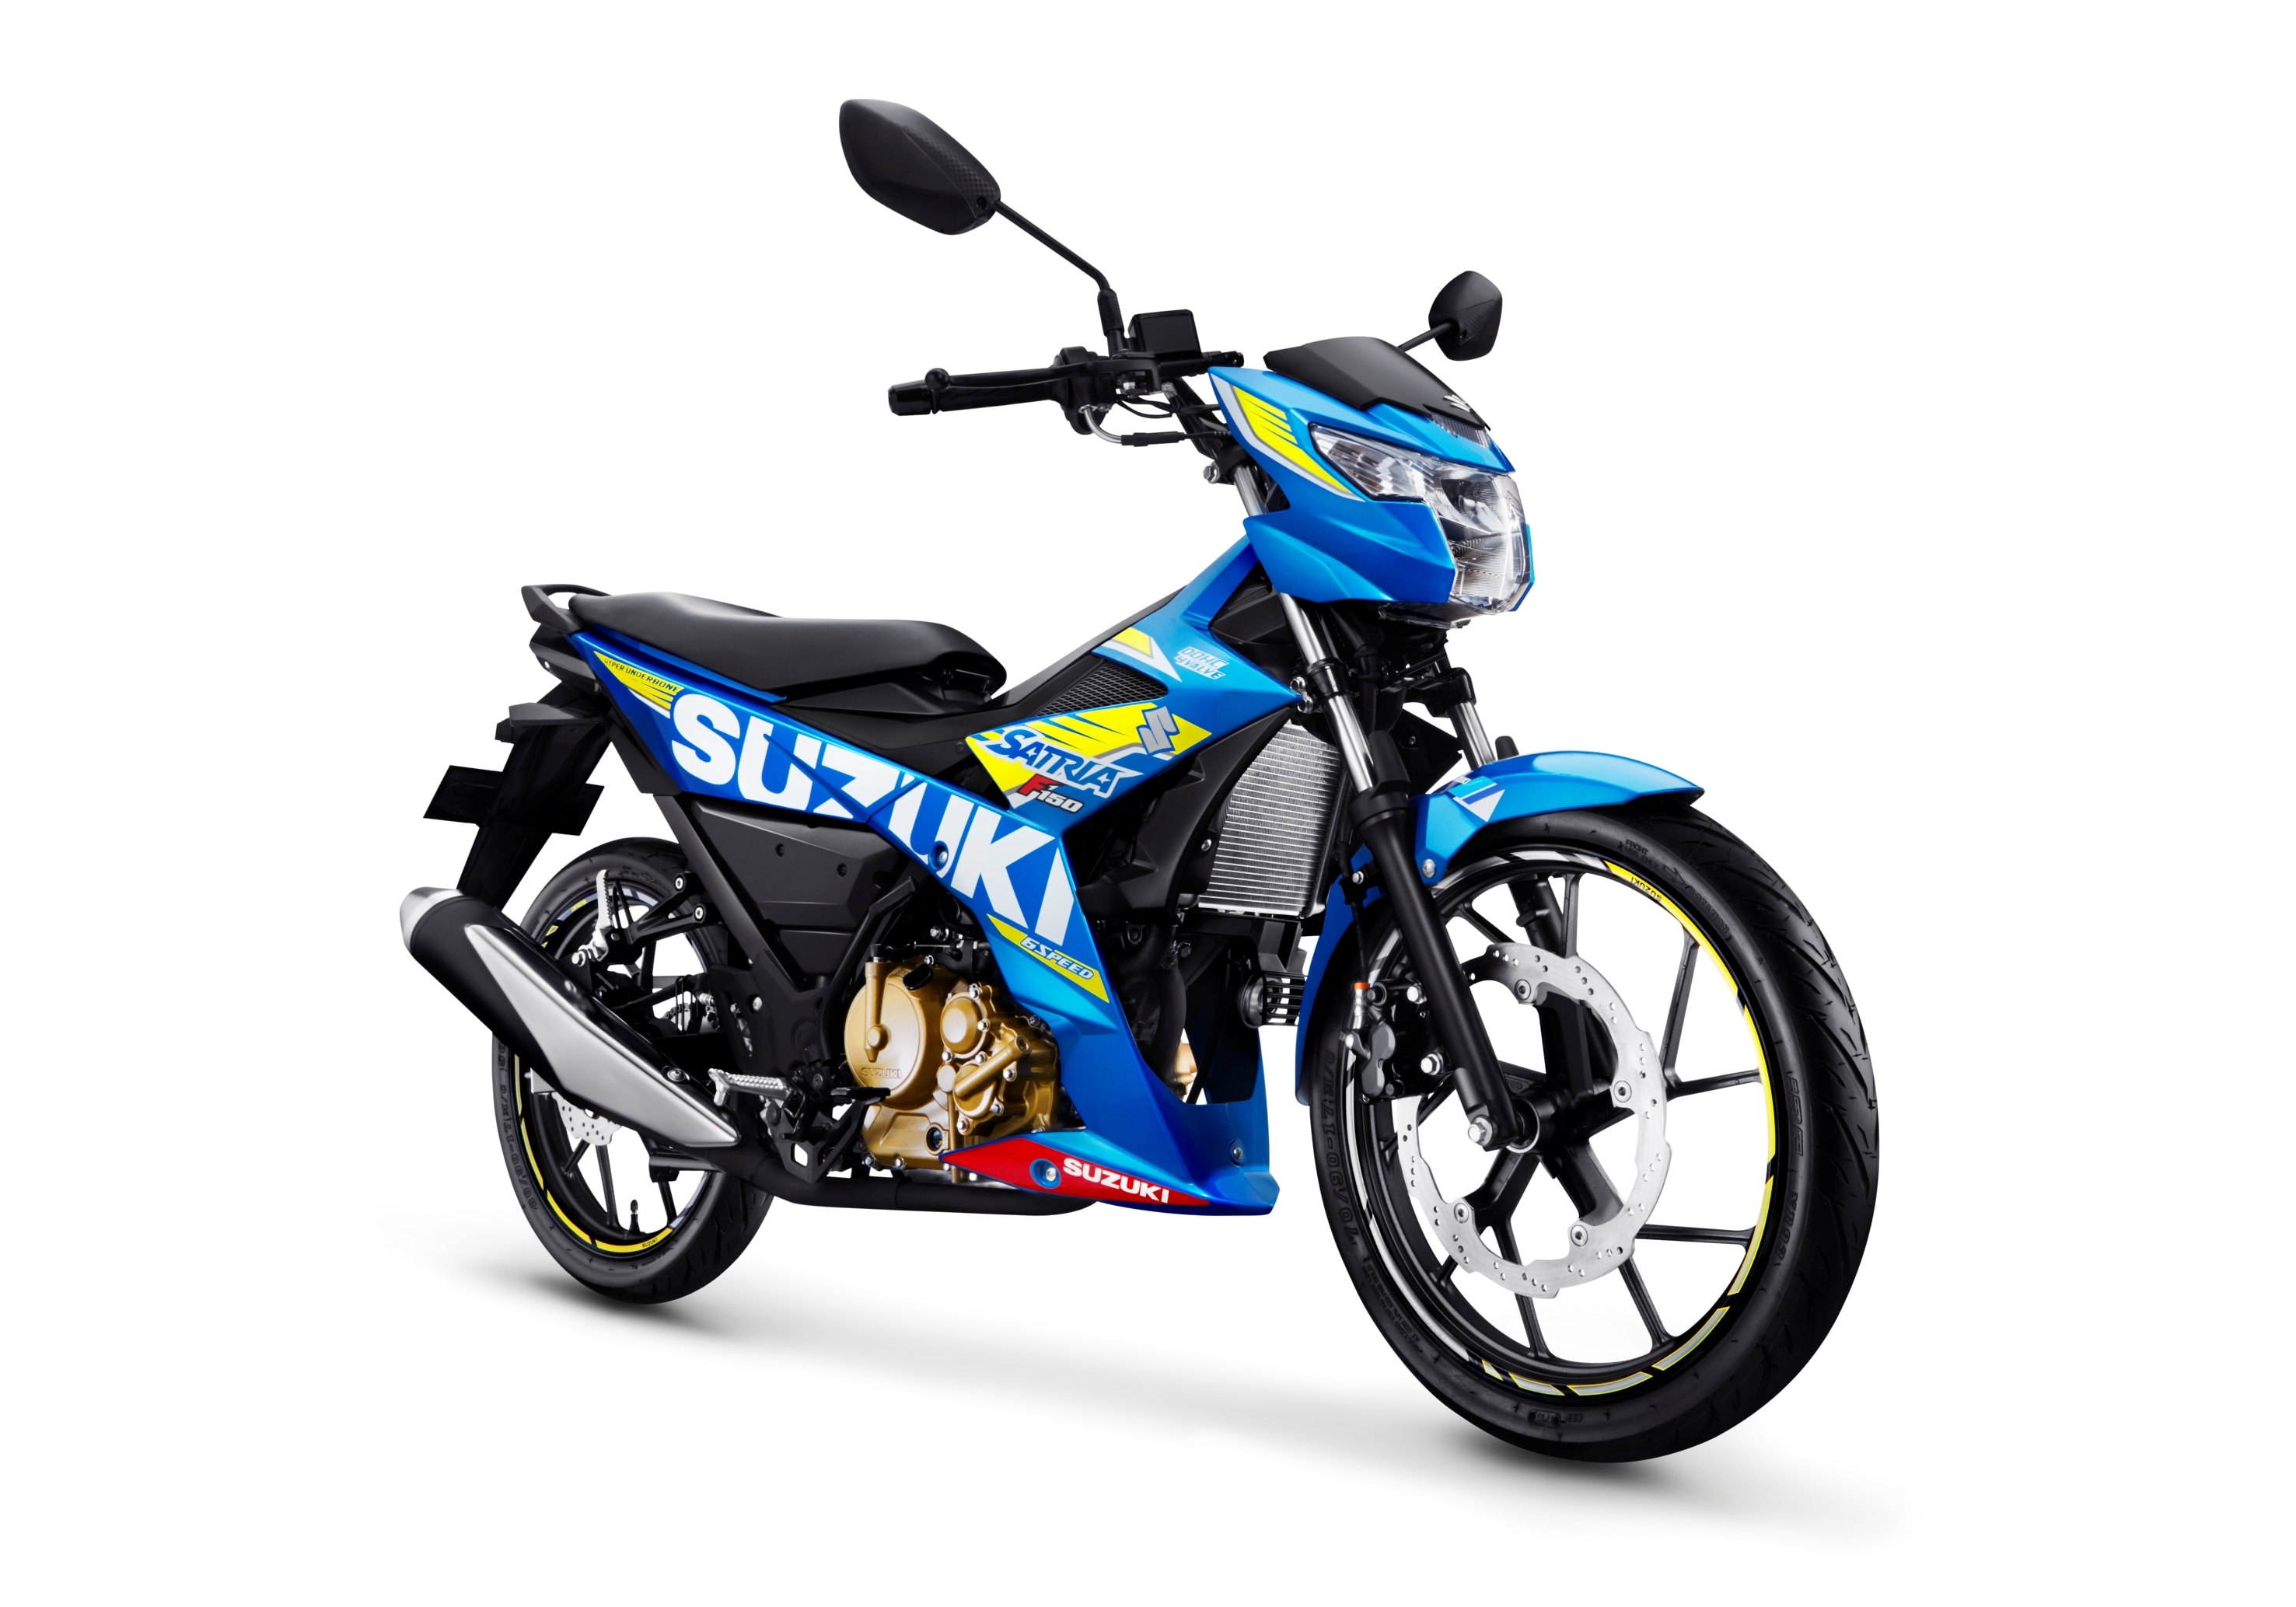 Suzuki Adakan Program Product Quality Update Bagi Pelanggan All New Satria F150